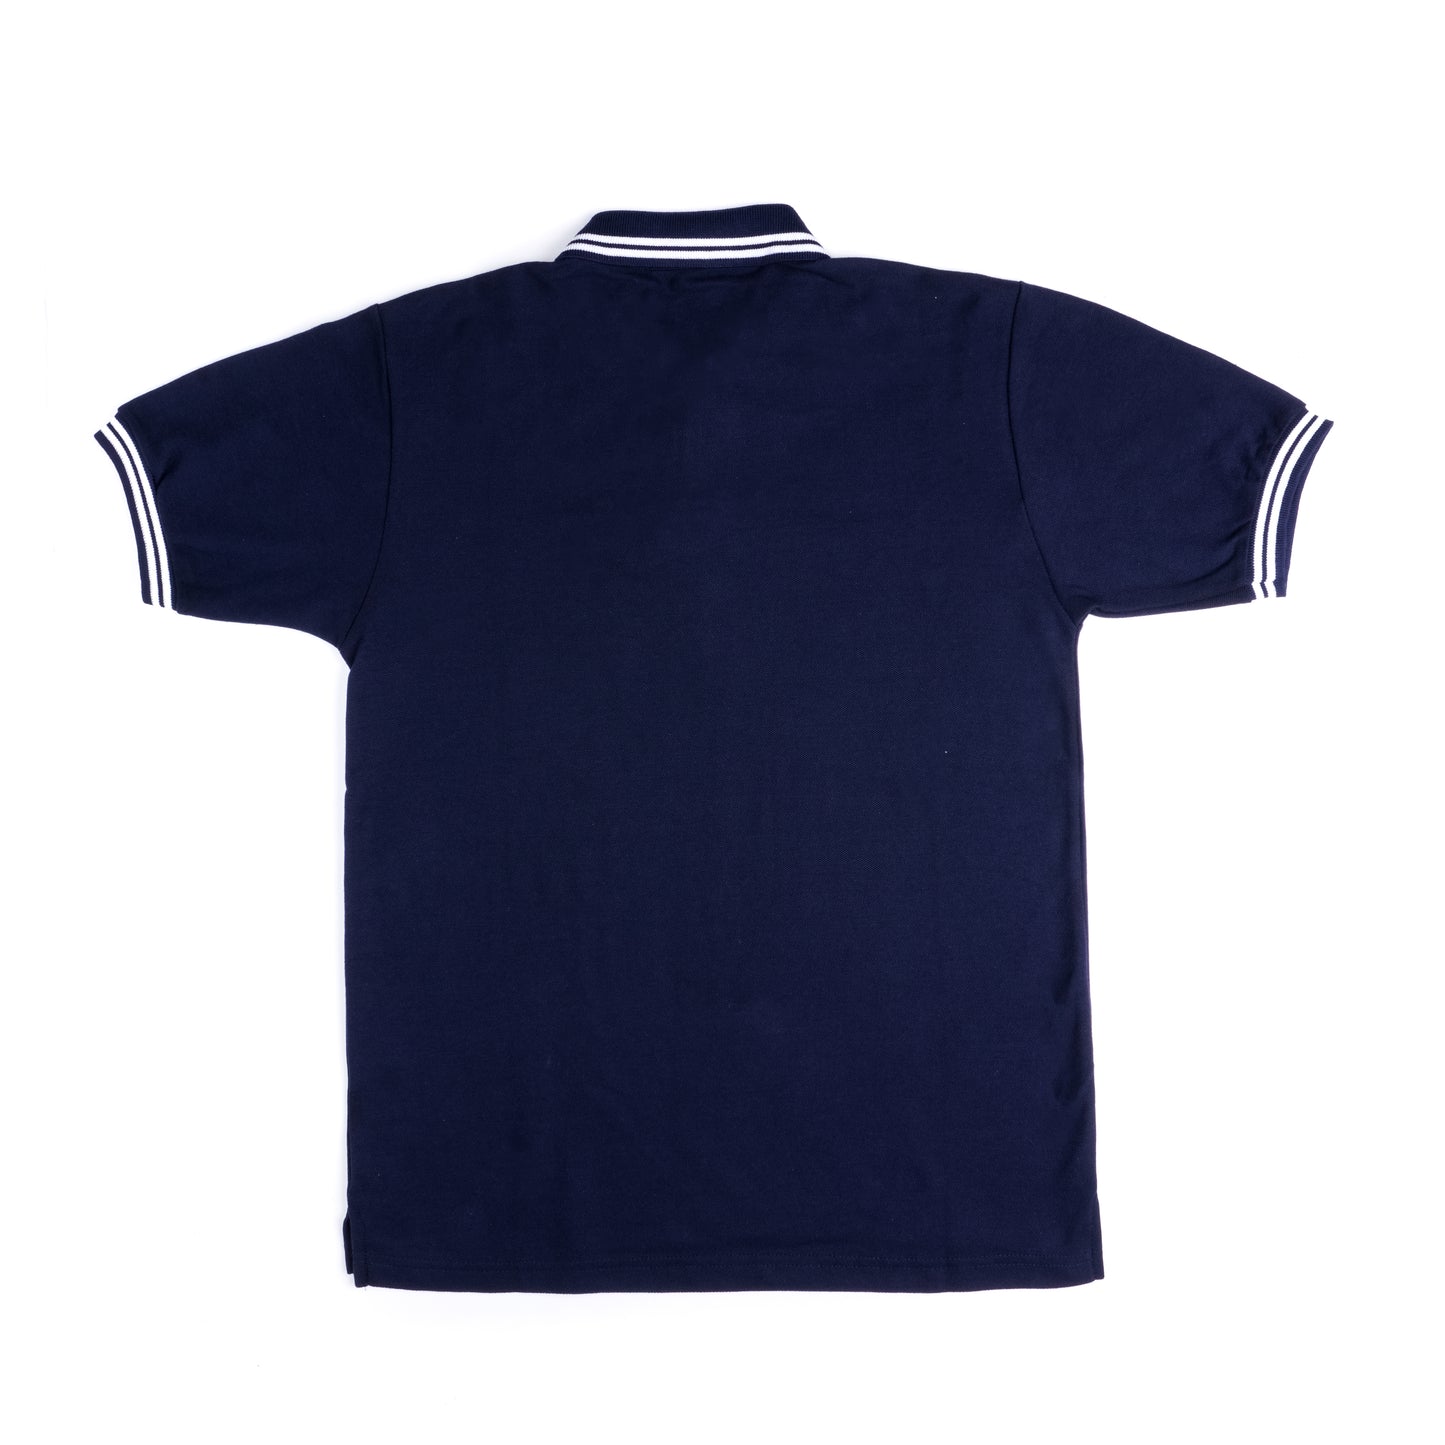 AZA Basic Polo Shirt - Navy